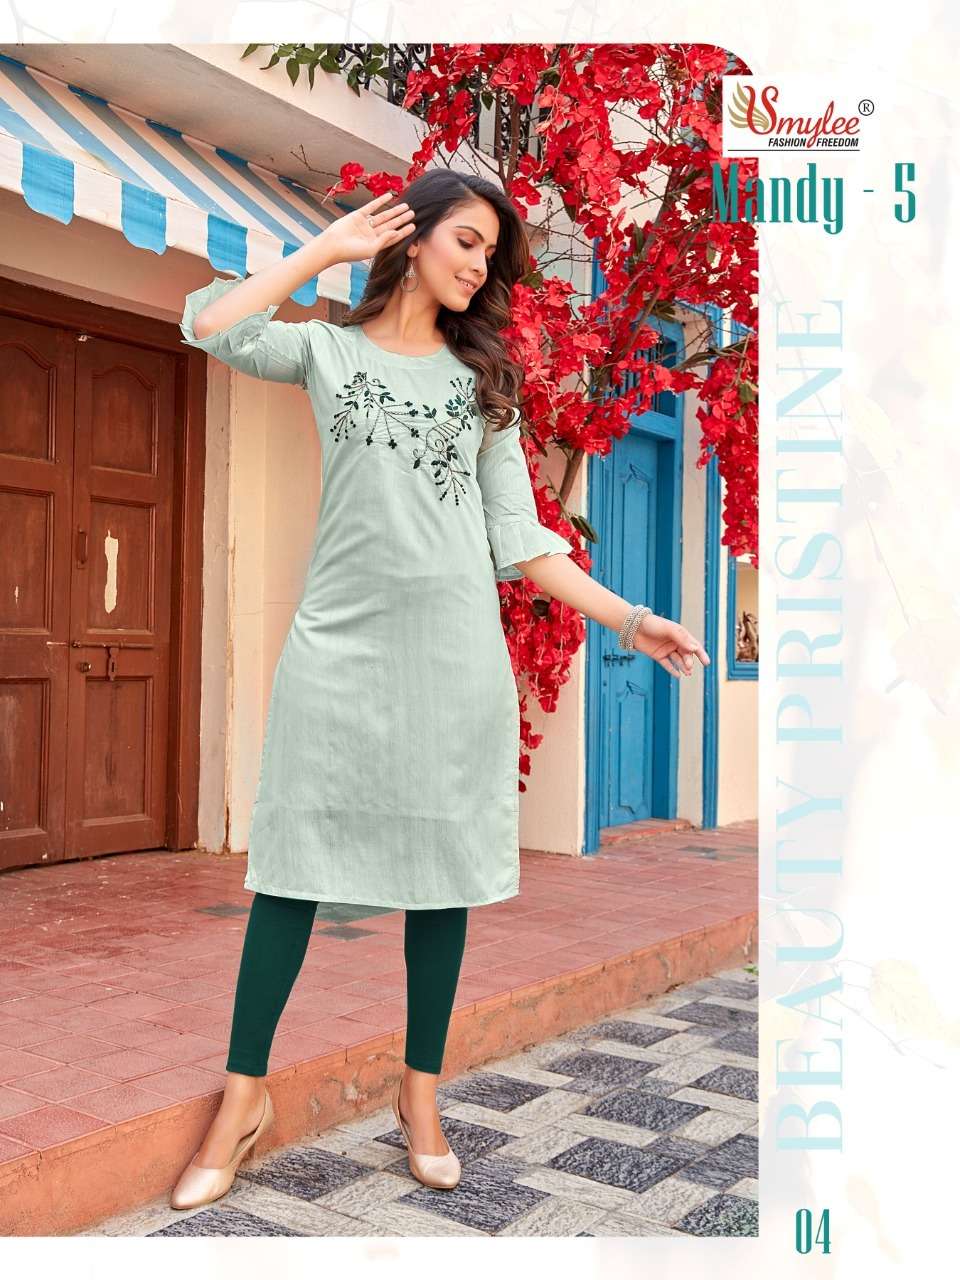 symlee mandy vol 5 heavy modal silk kurti collection online shopping surat 